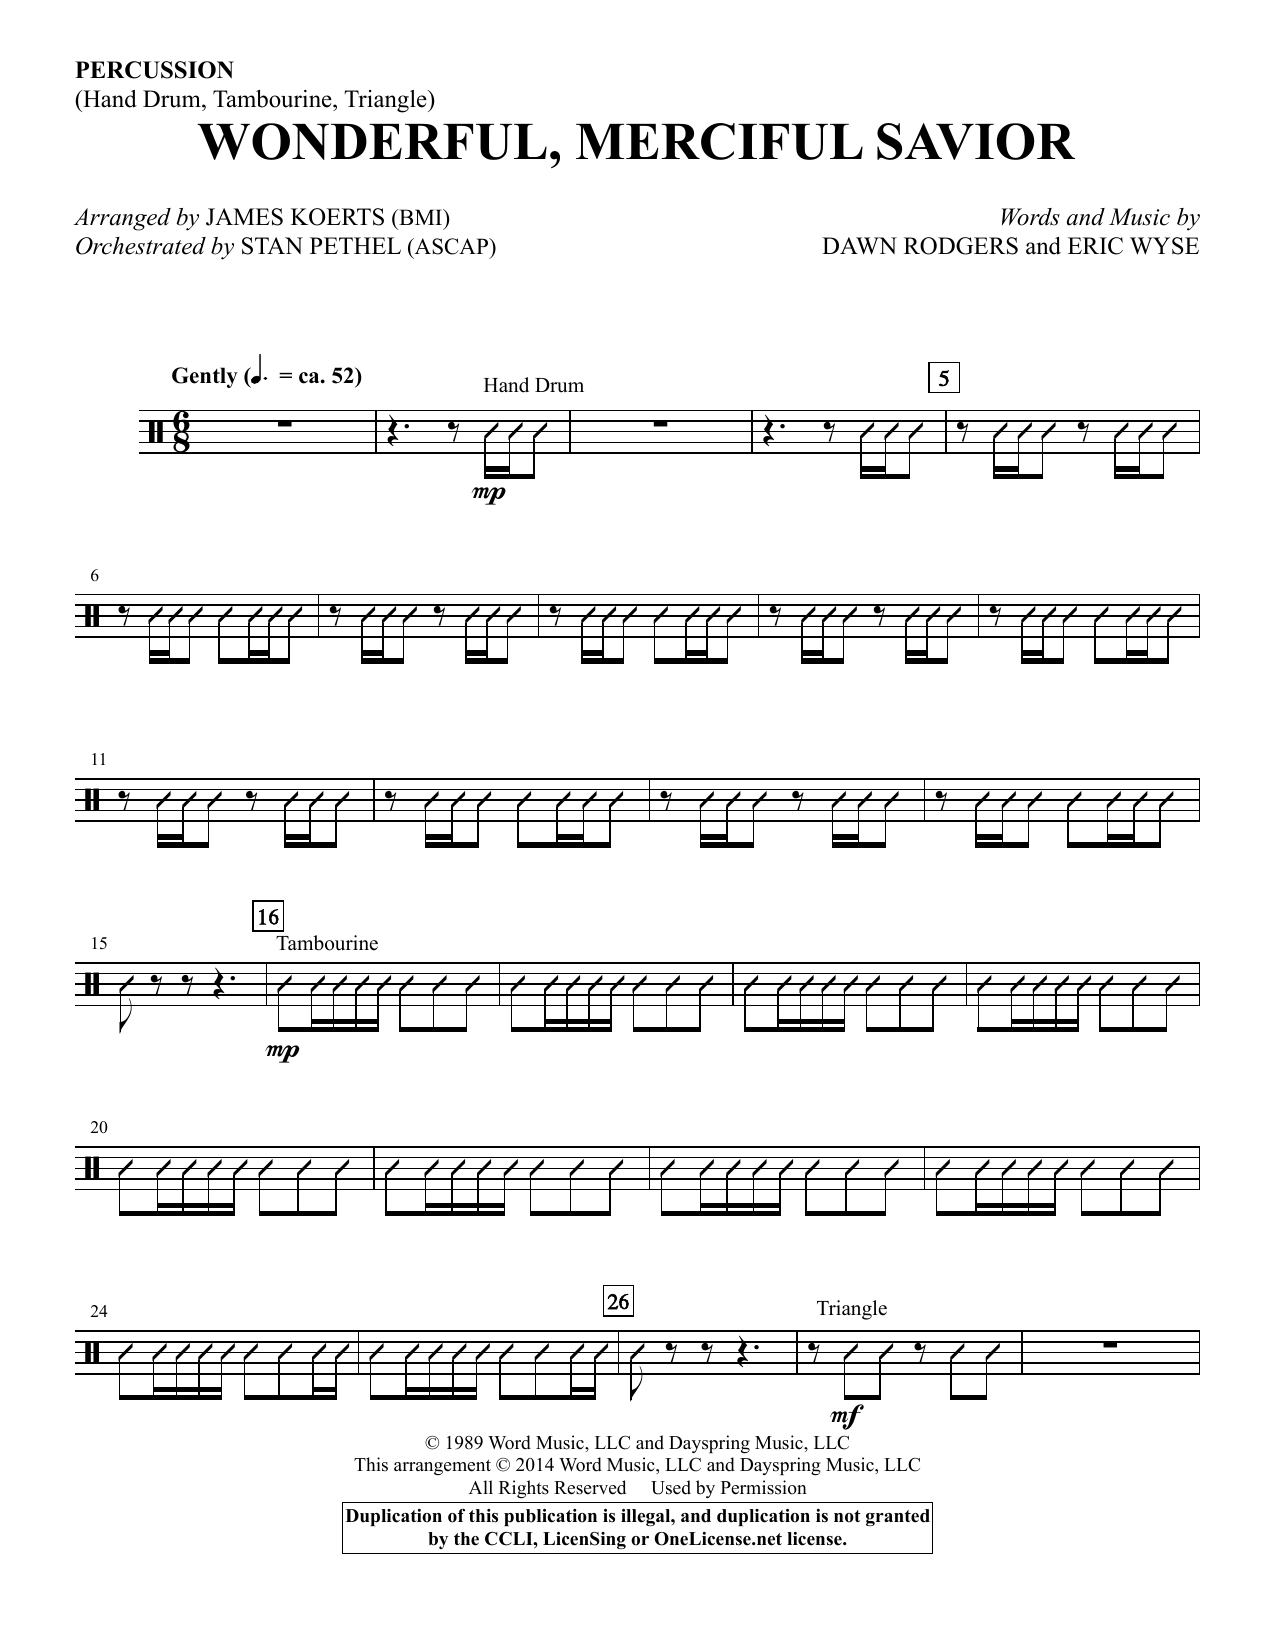 James Koerts Wonderful, Merciful Savior - Percussion sheet music notes and chords. Download Printable PDF.